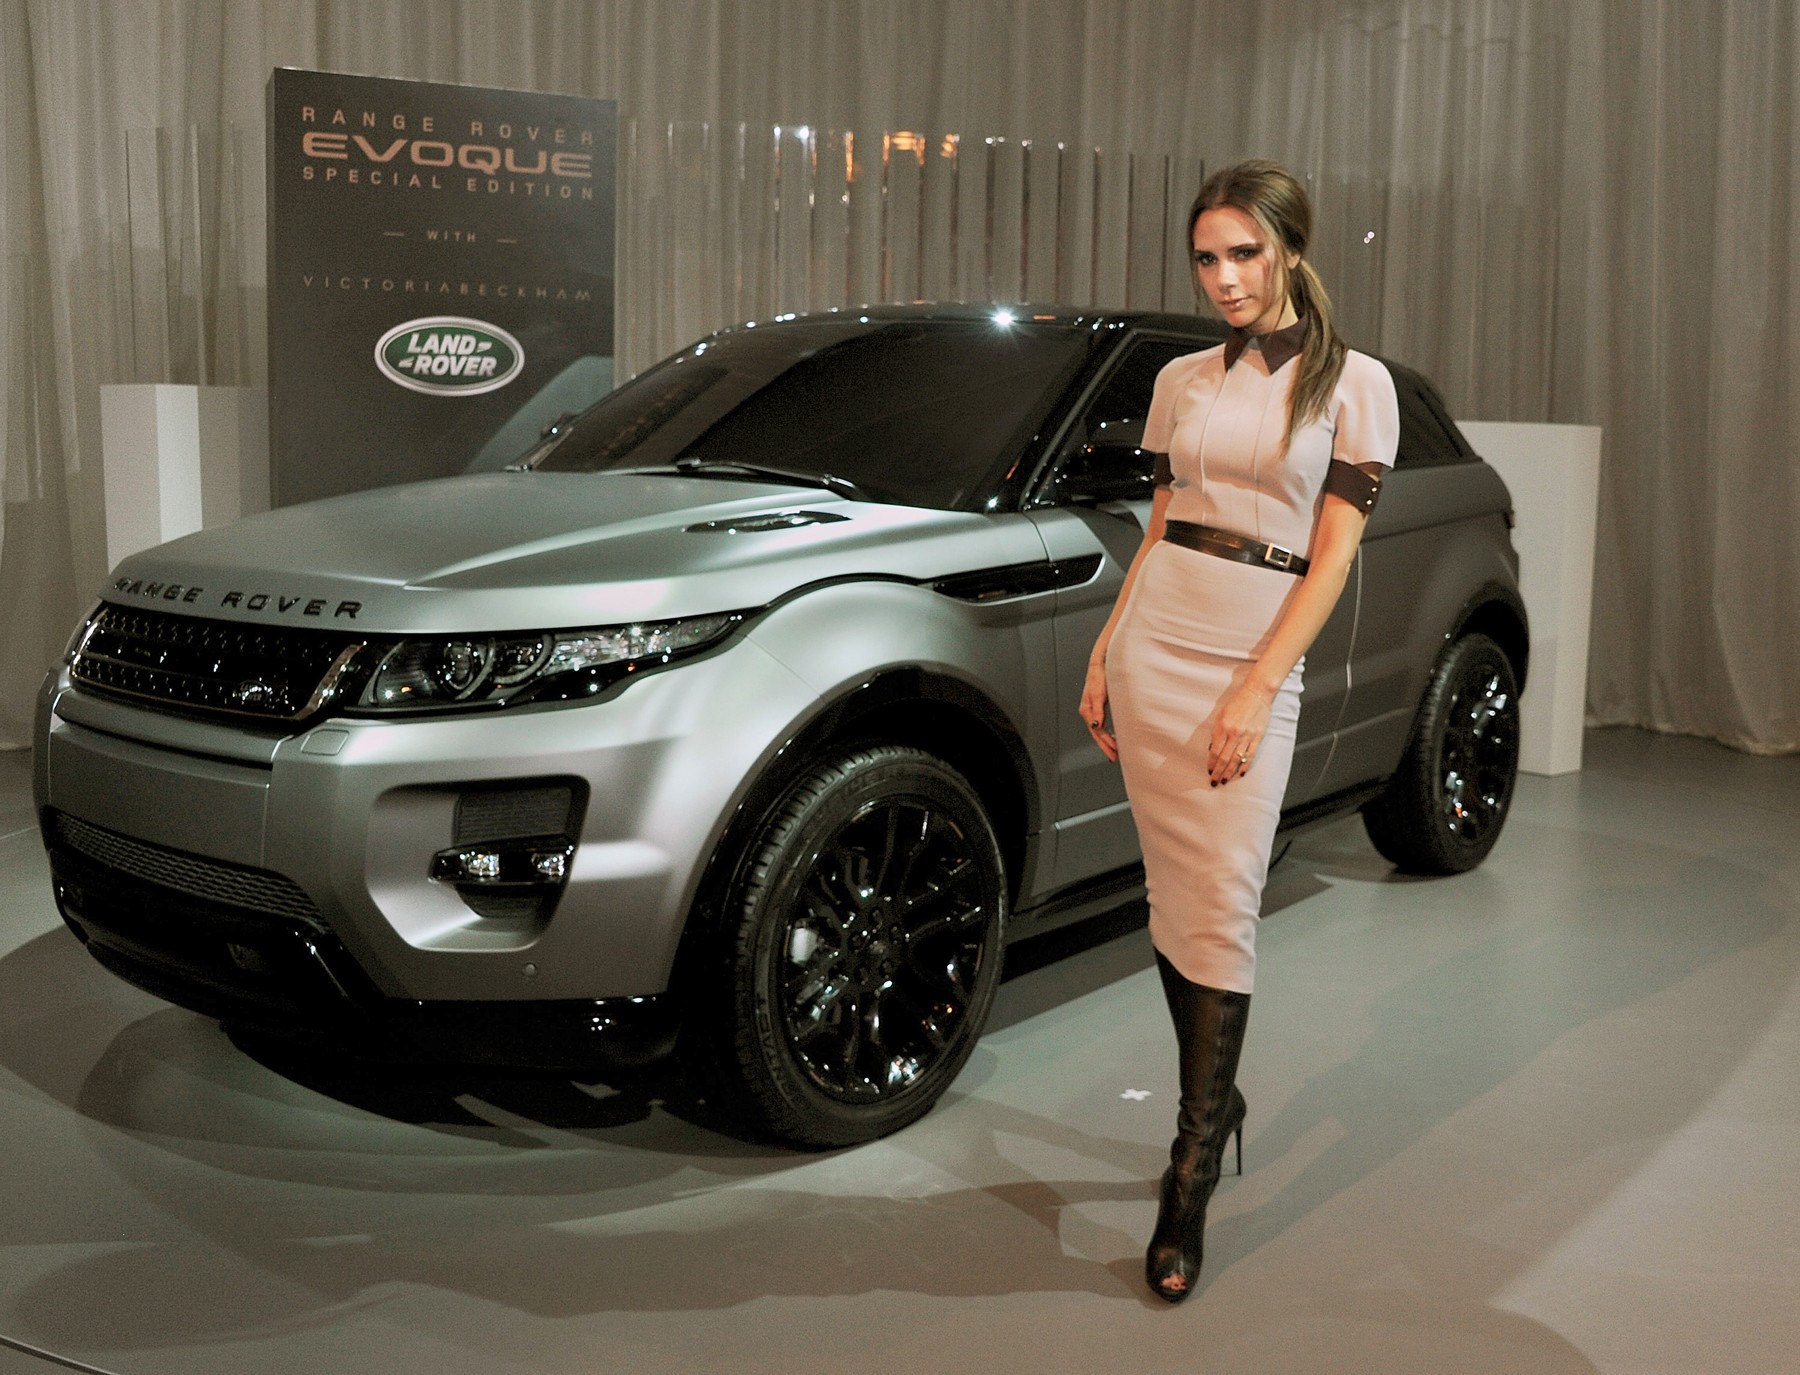 Image with Range Rover Evoque Victoria